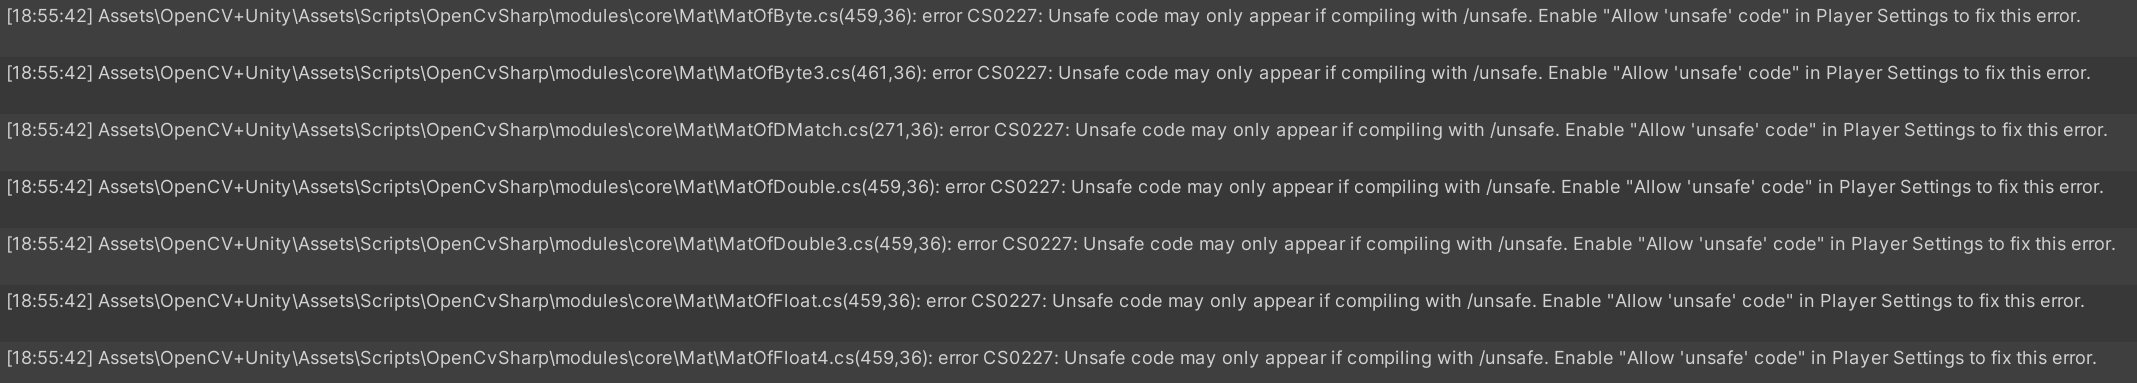 Unity unsafe code error